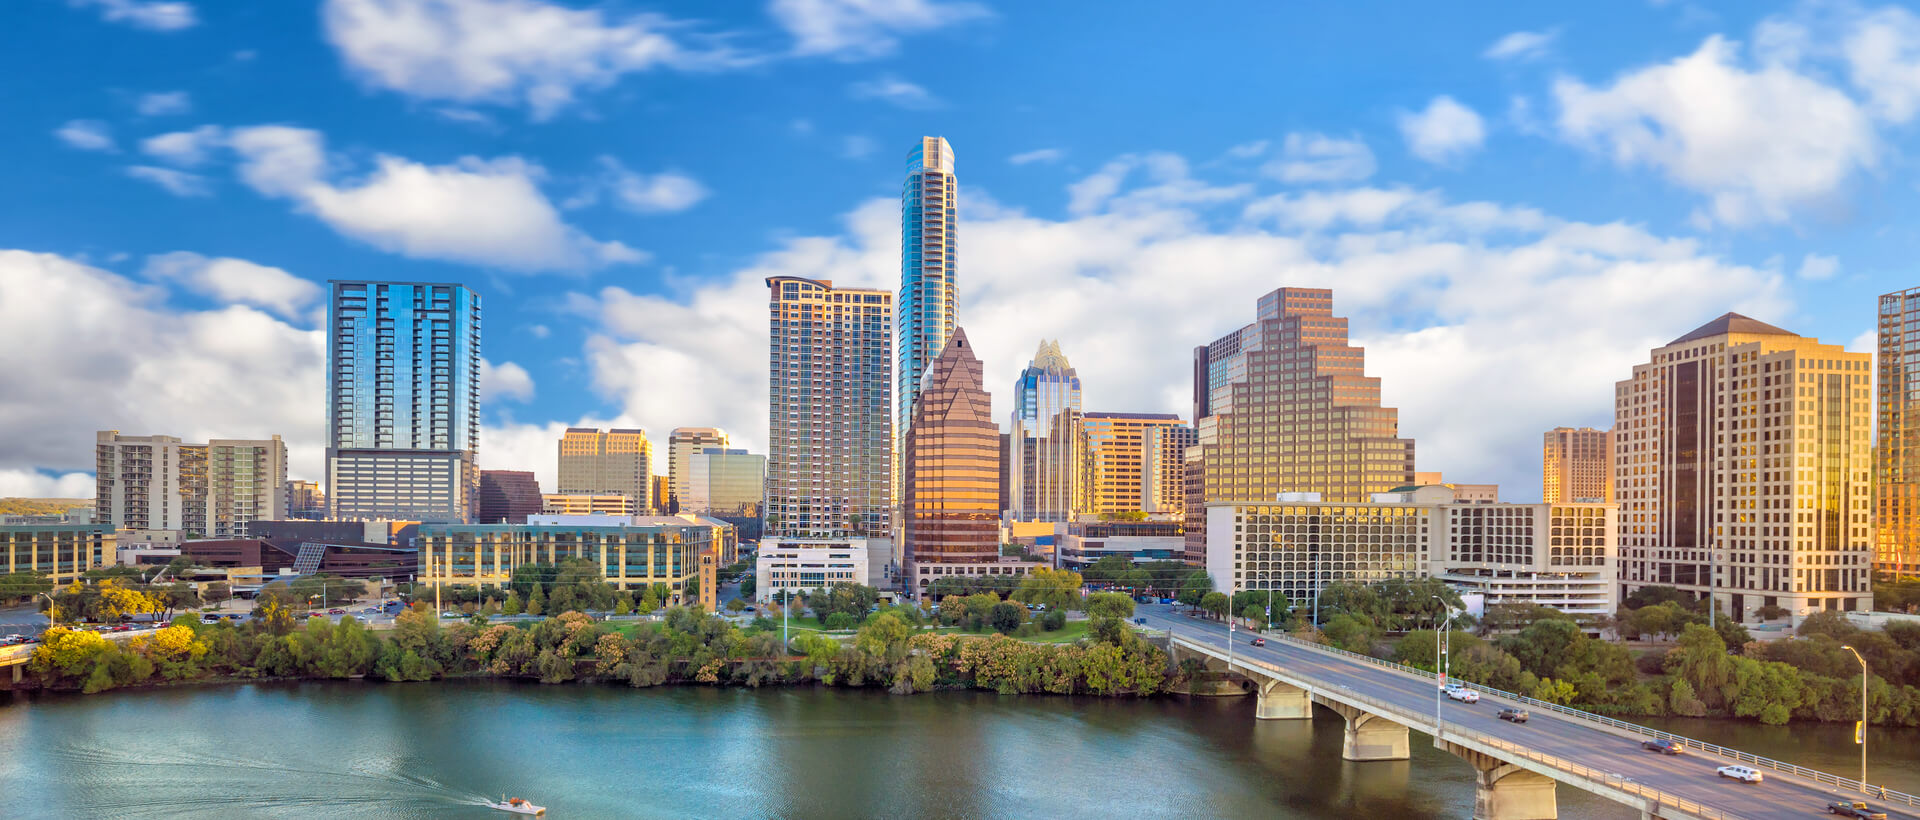 Austin Office Market Report 2021